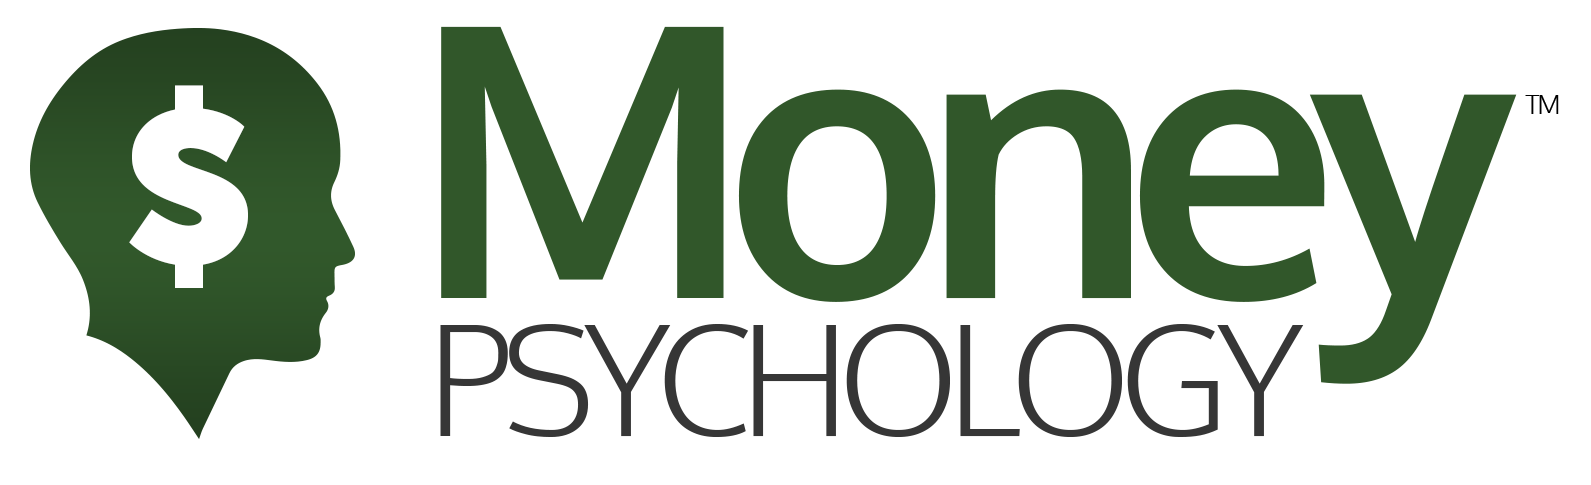 Money Psychology Course